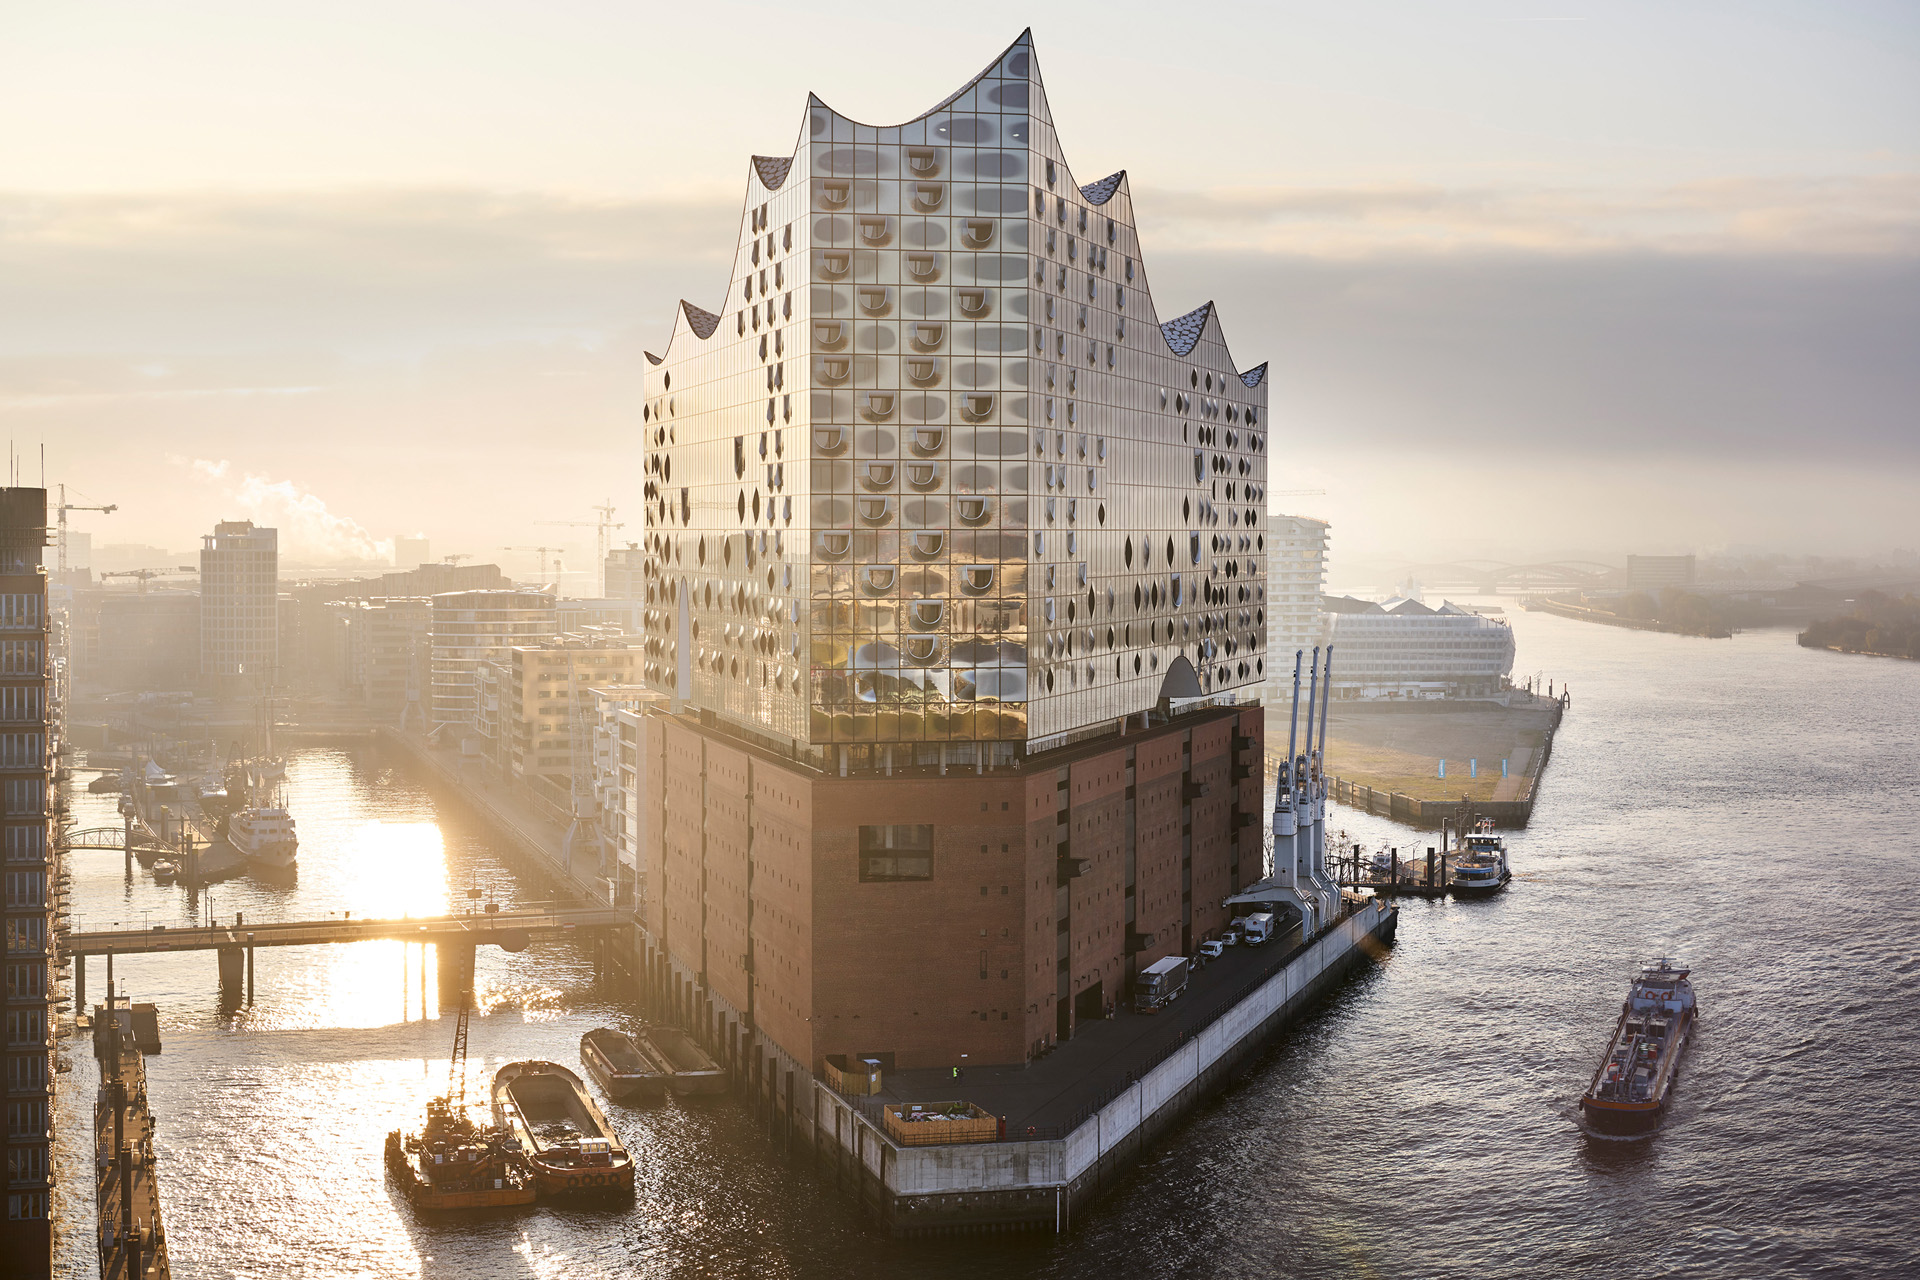 Hamburg's Elbphilharmonie